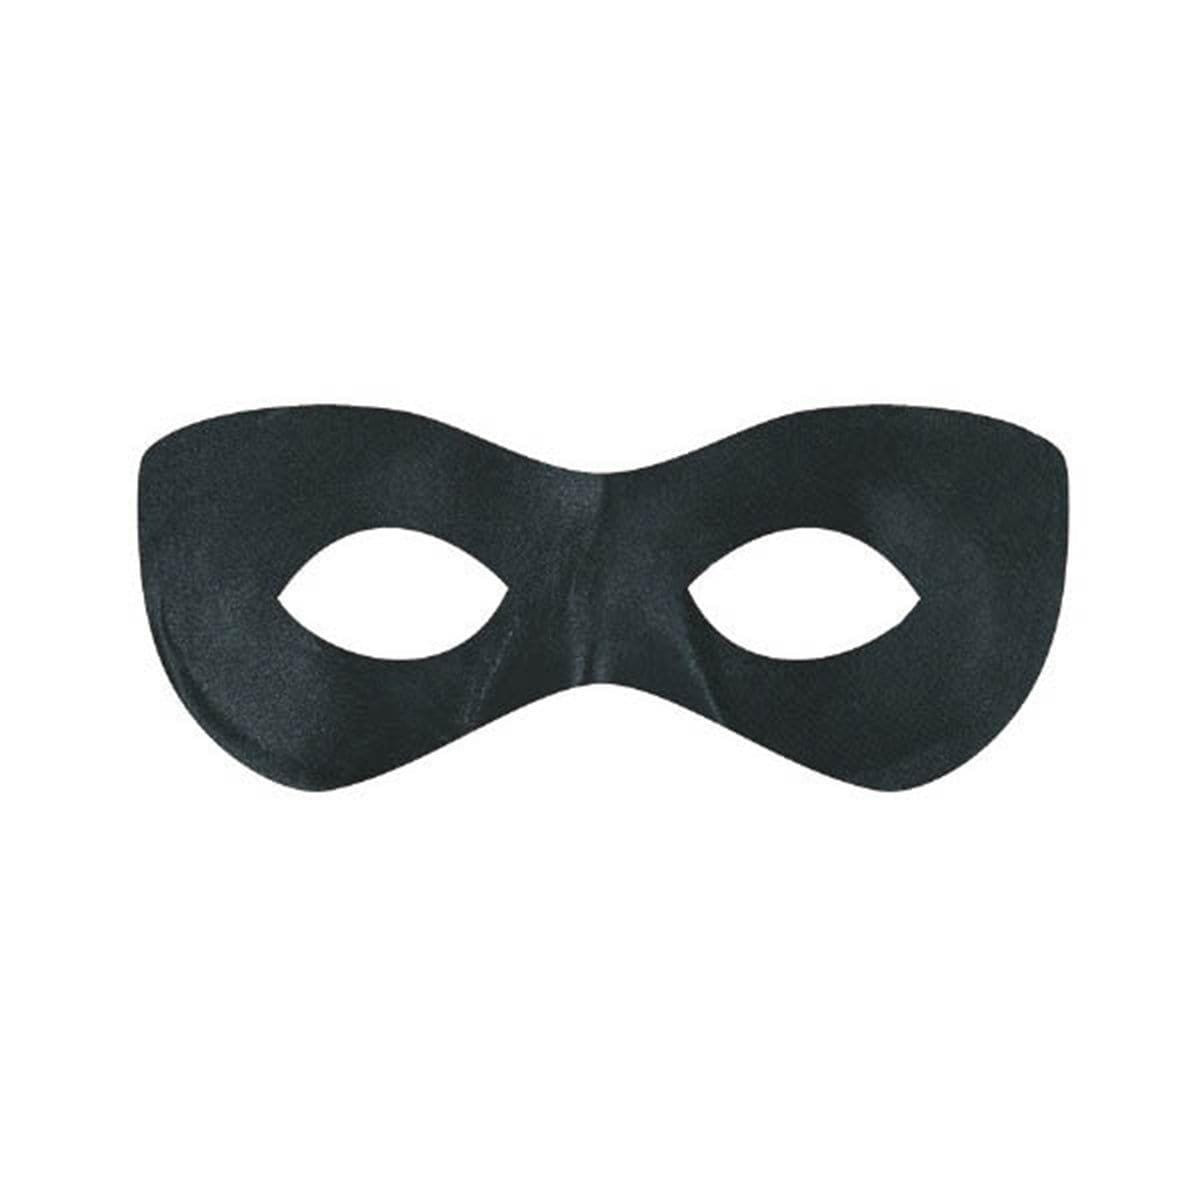 Black Super Hero Mask for Adults